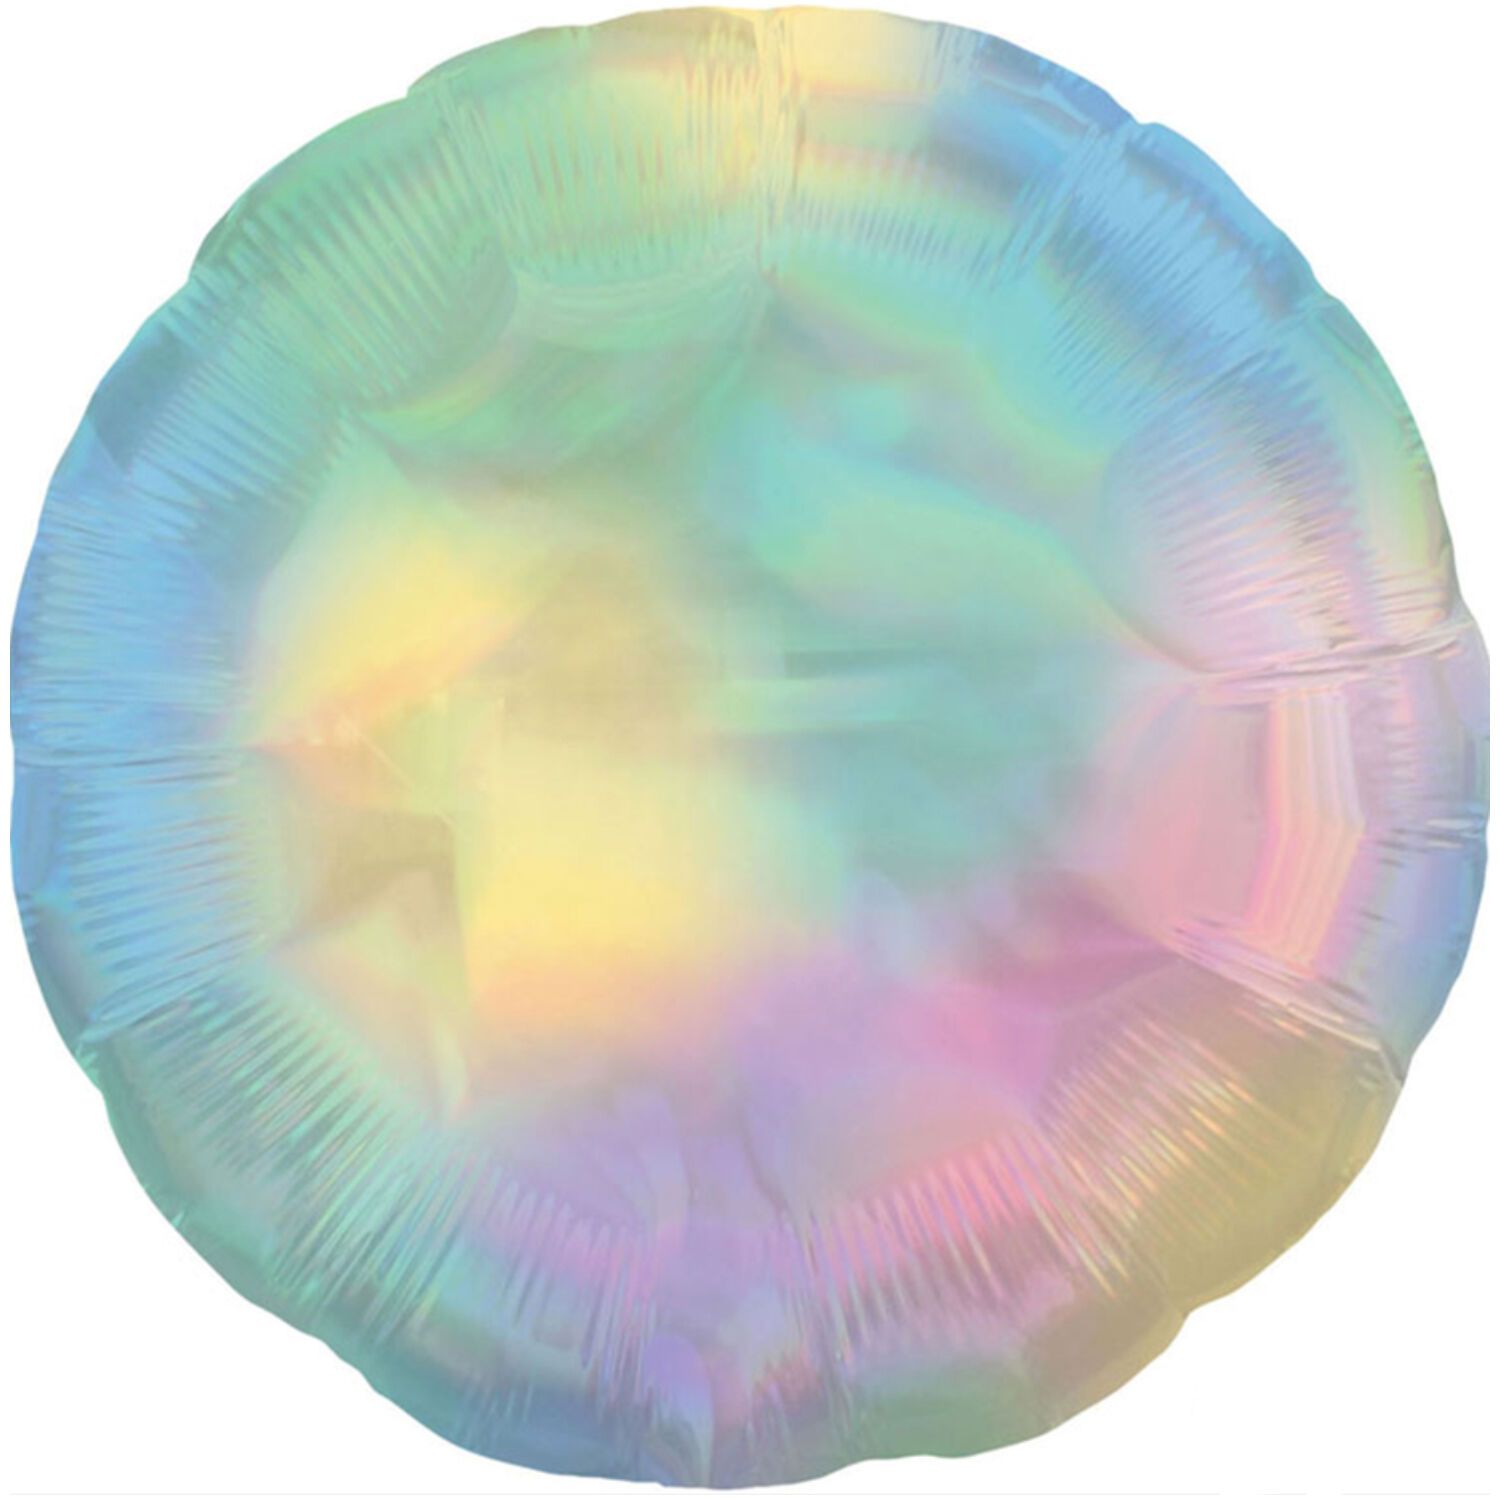 NEU Folienballon rund, pastell-irisierend, ca. 43cm